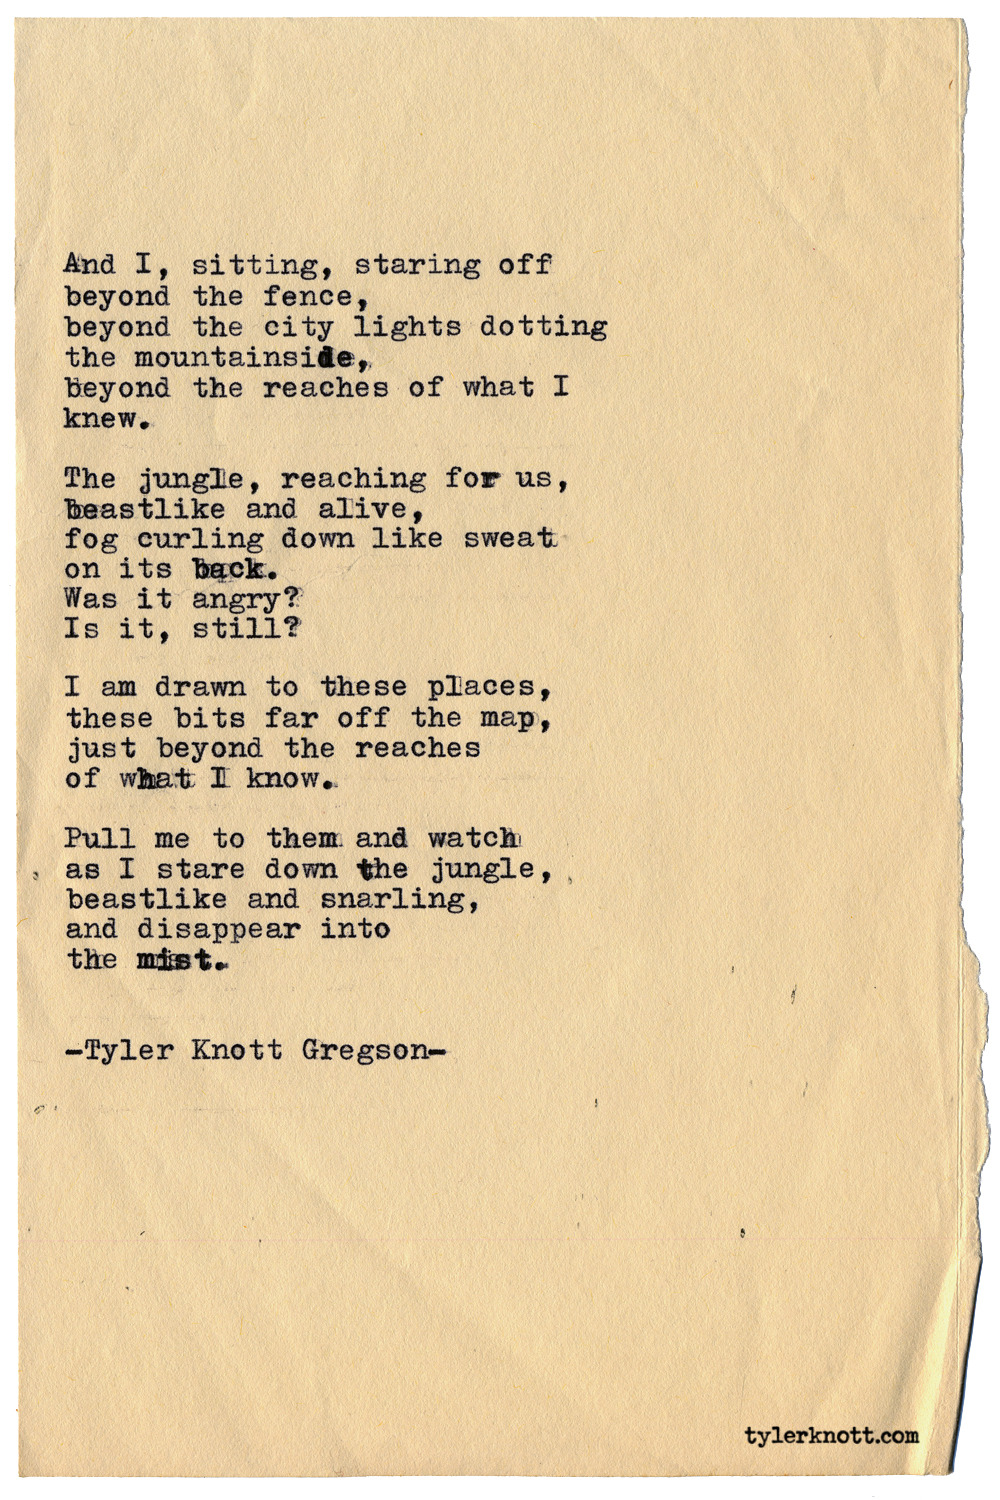 Tyler Knott Gregson — Typewriter Series #2166 by Tyler Knott Gregson